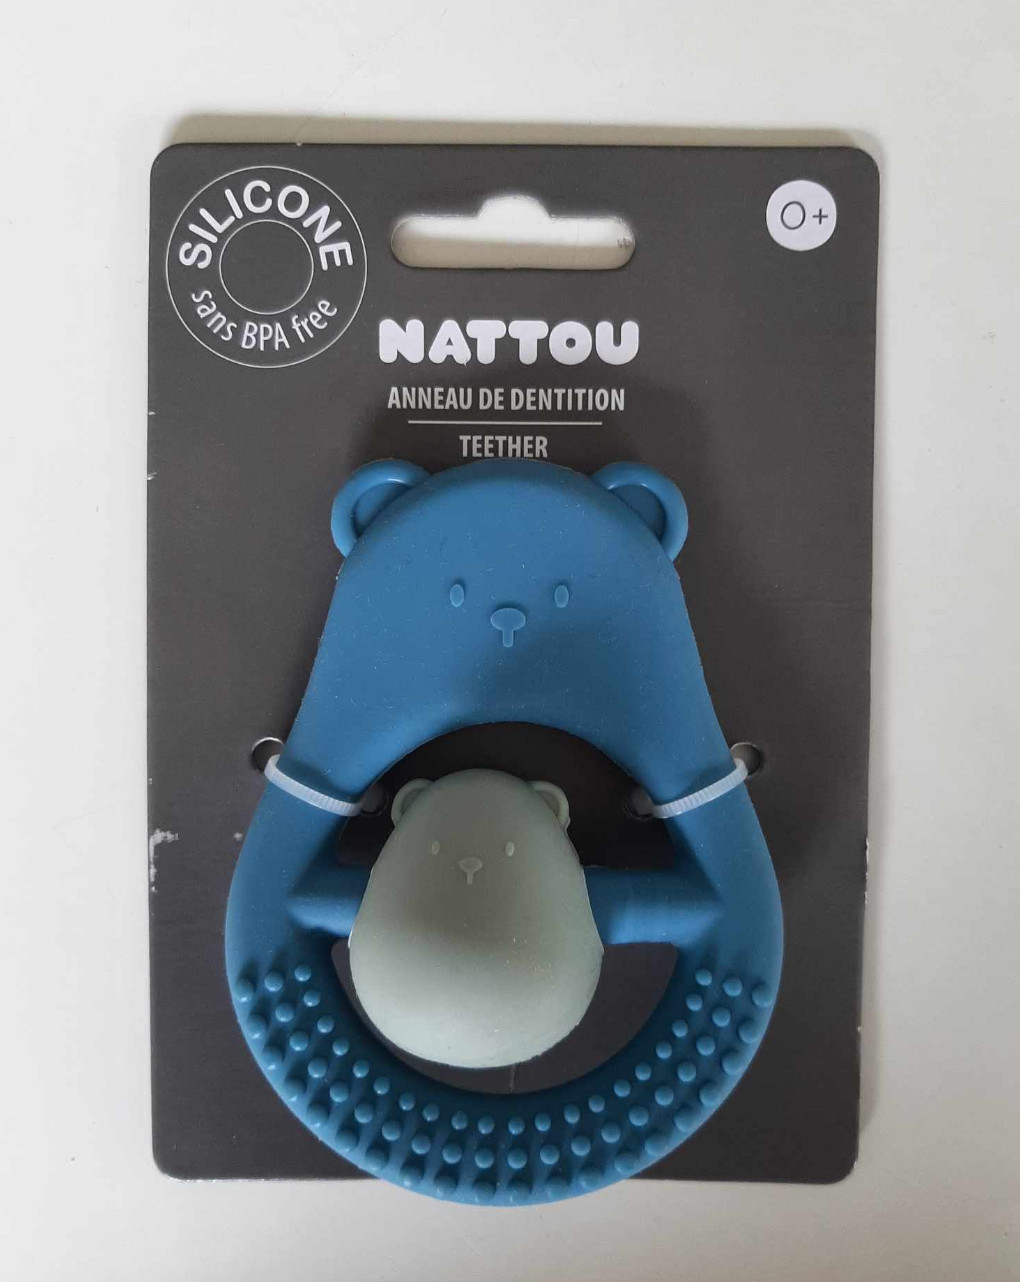 Sonajero de silicona azul claro y verde para la dentición - nattou - Nattou